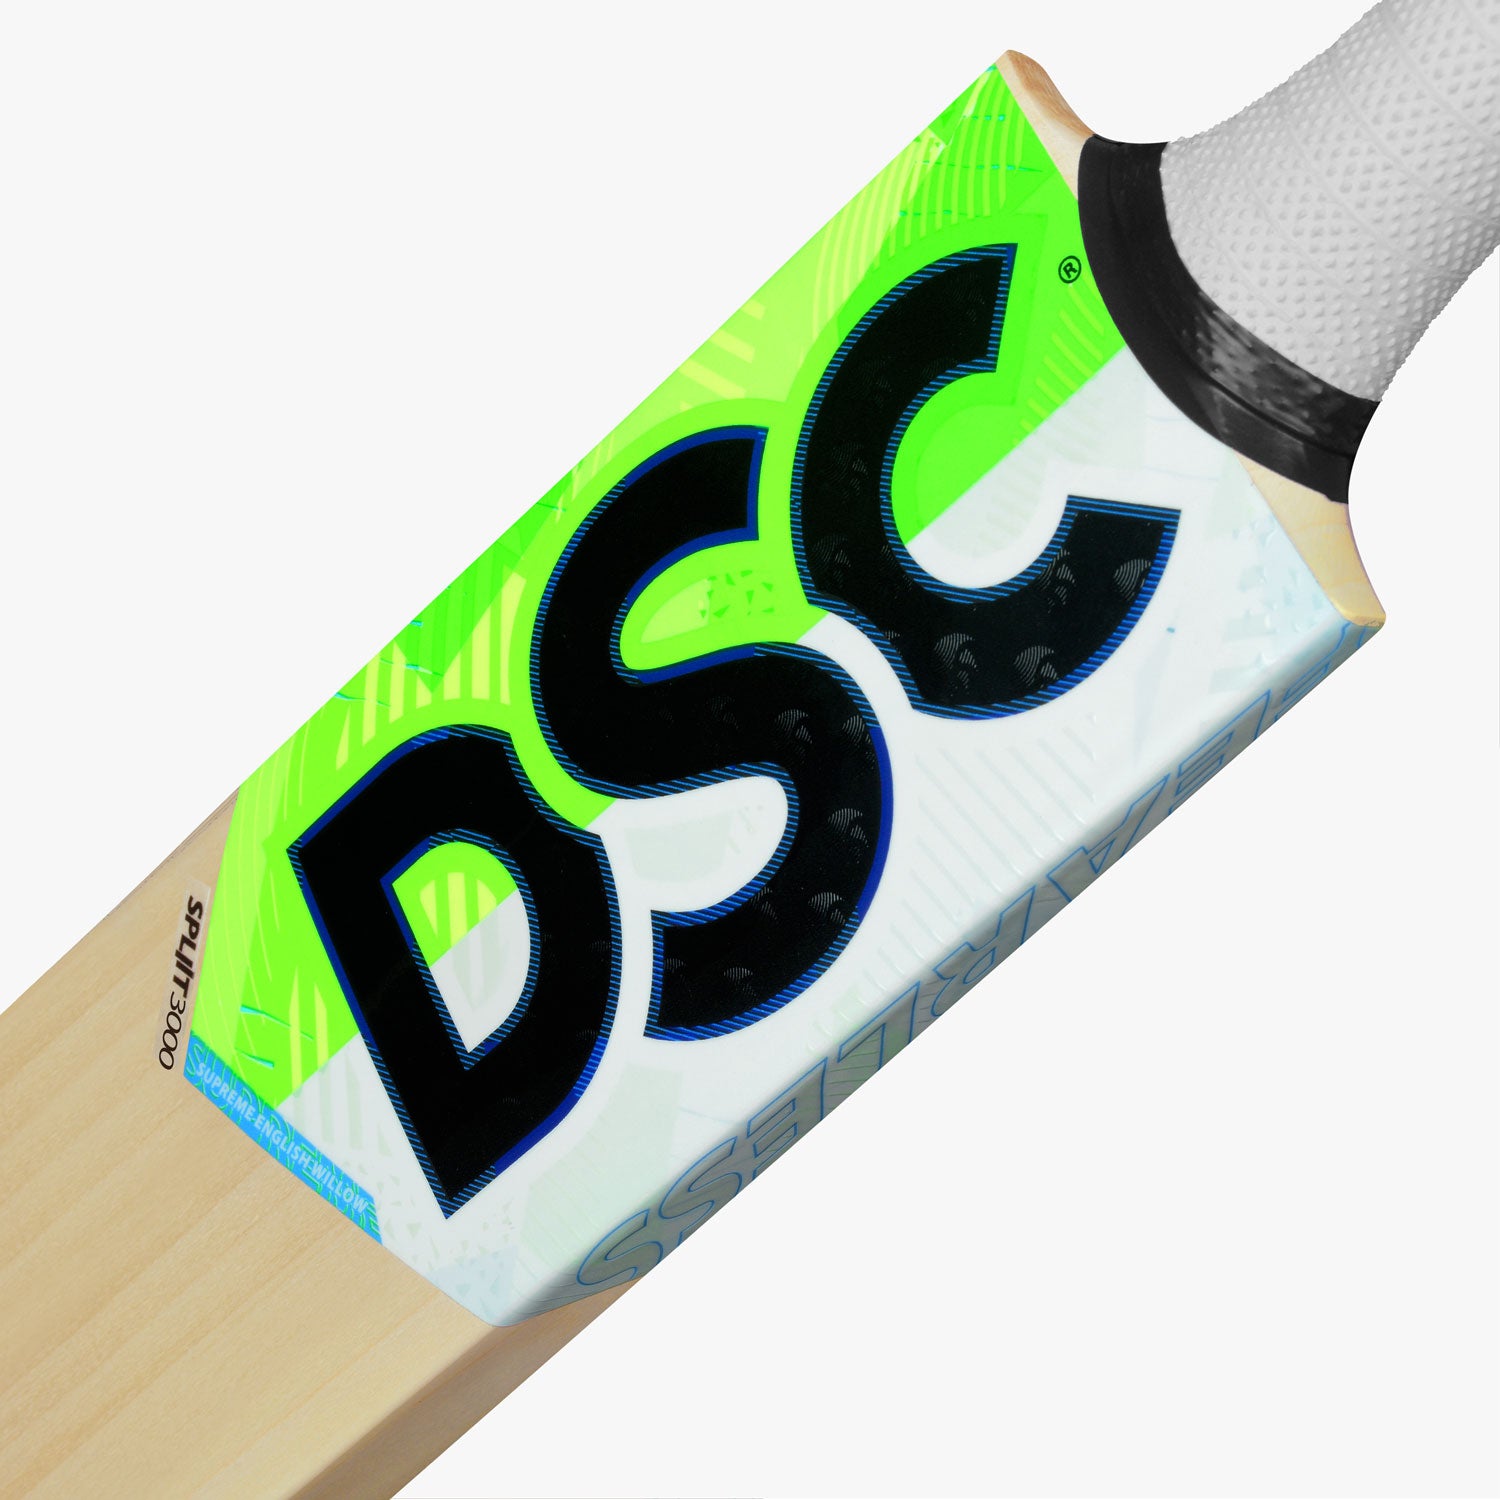 DSC Split 3000 Senior Cricket Bat